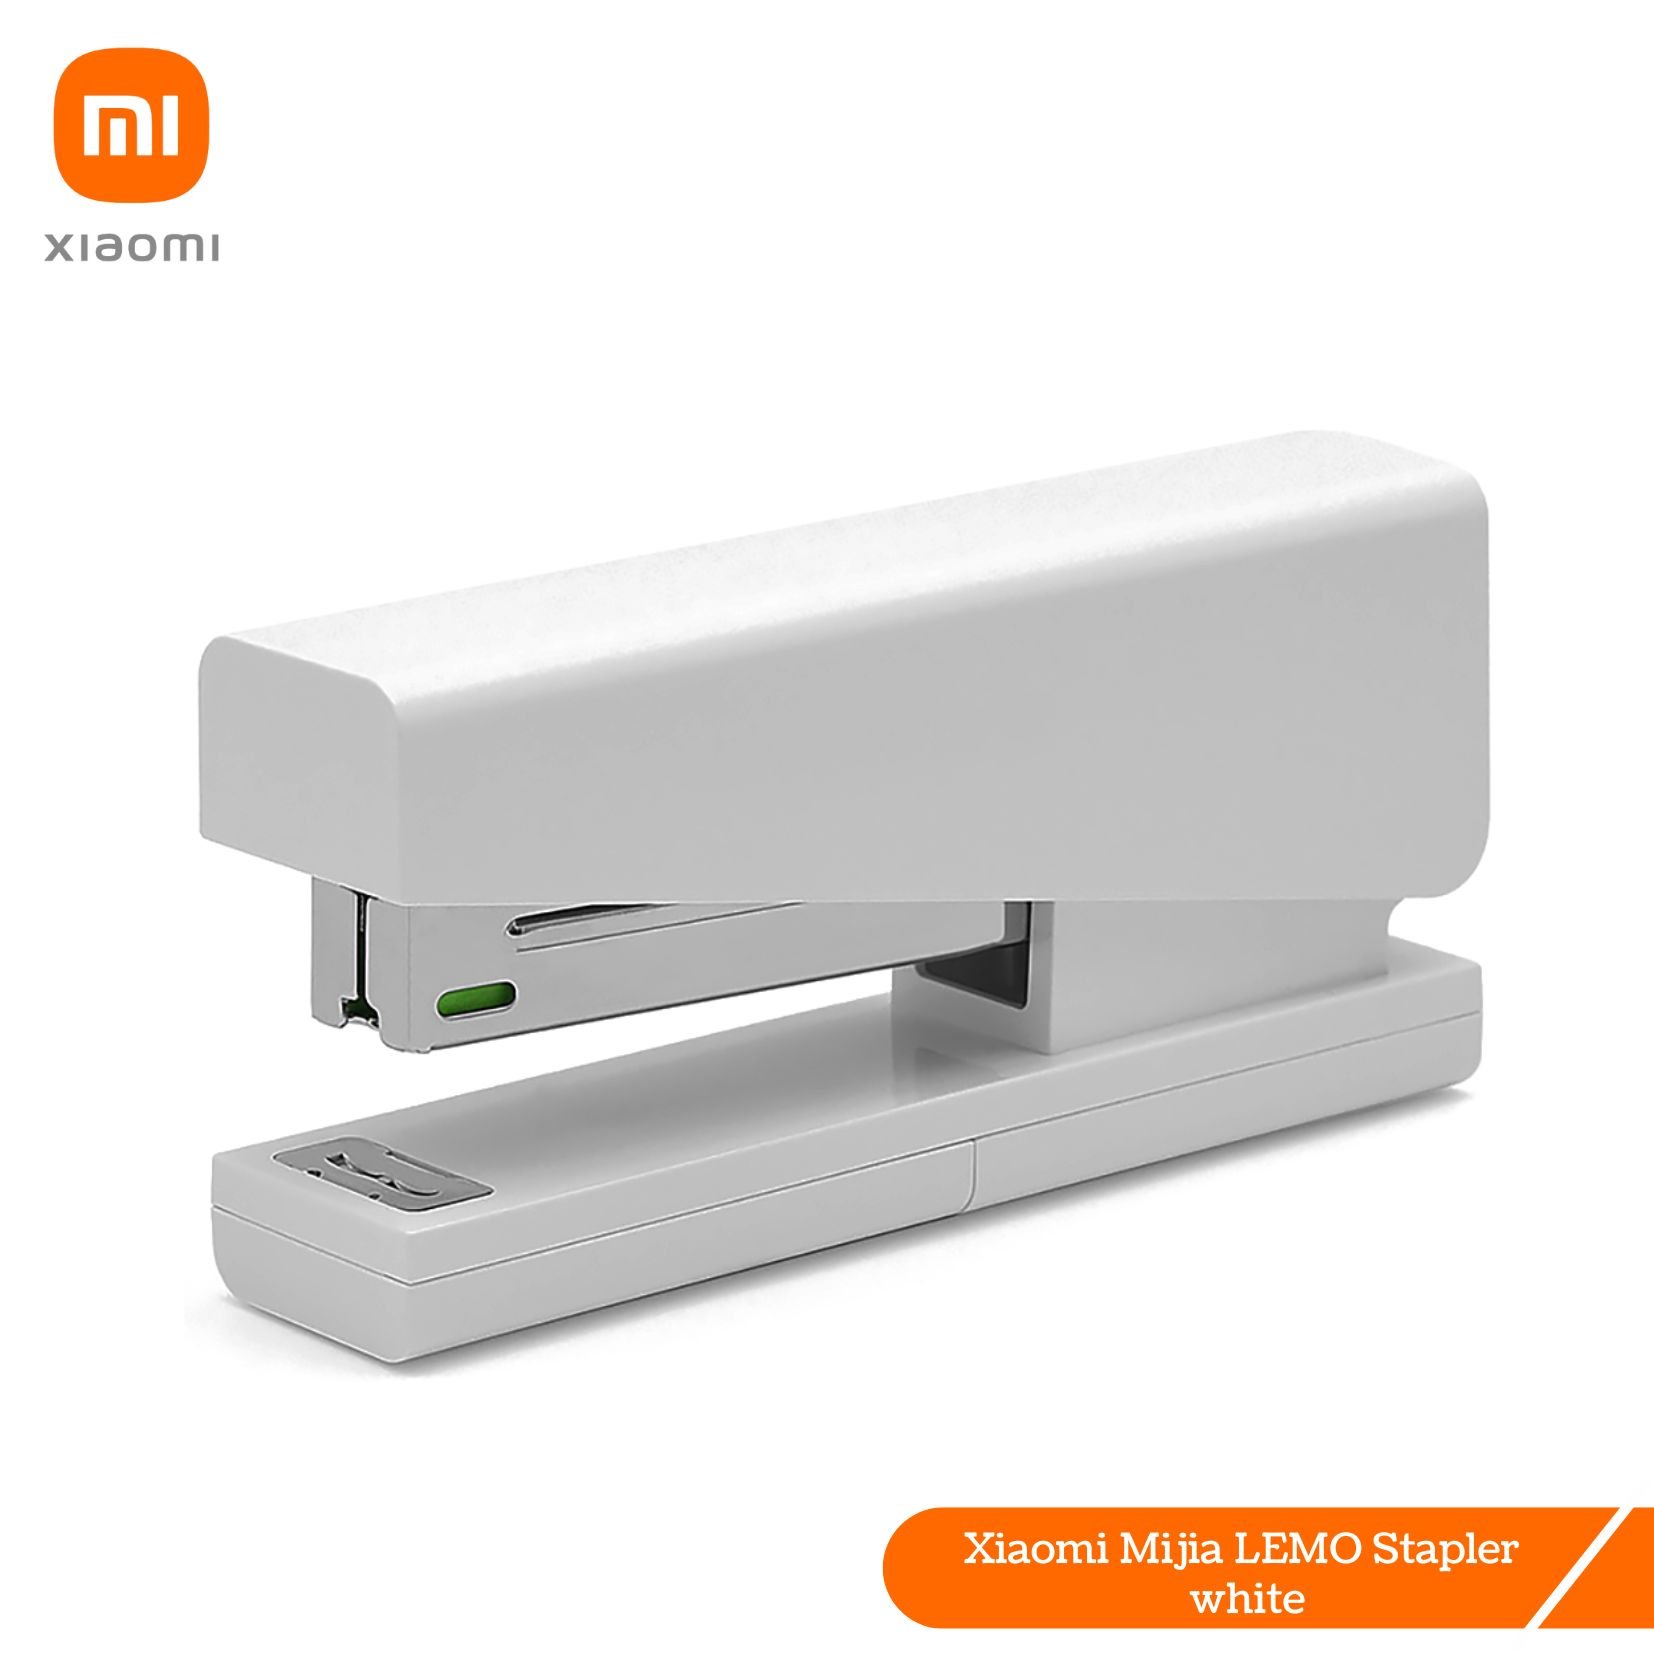 Xiaomi Mijia LEMO Stapler white